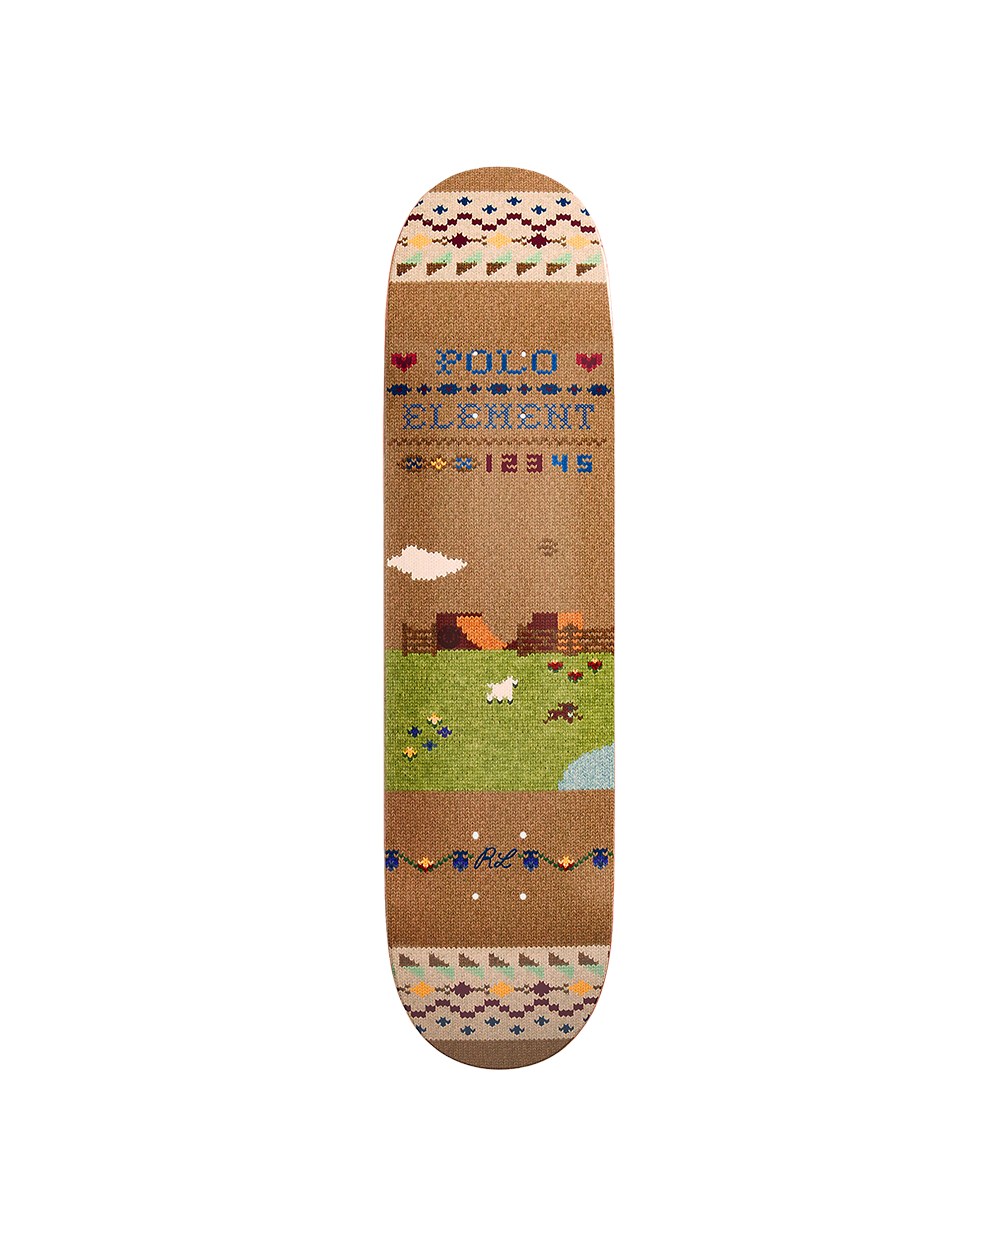 8.0 POLO X ELEMENT Skateboard Deck